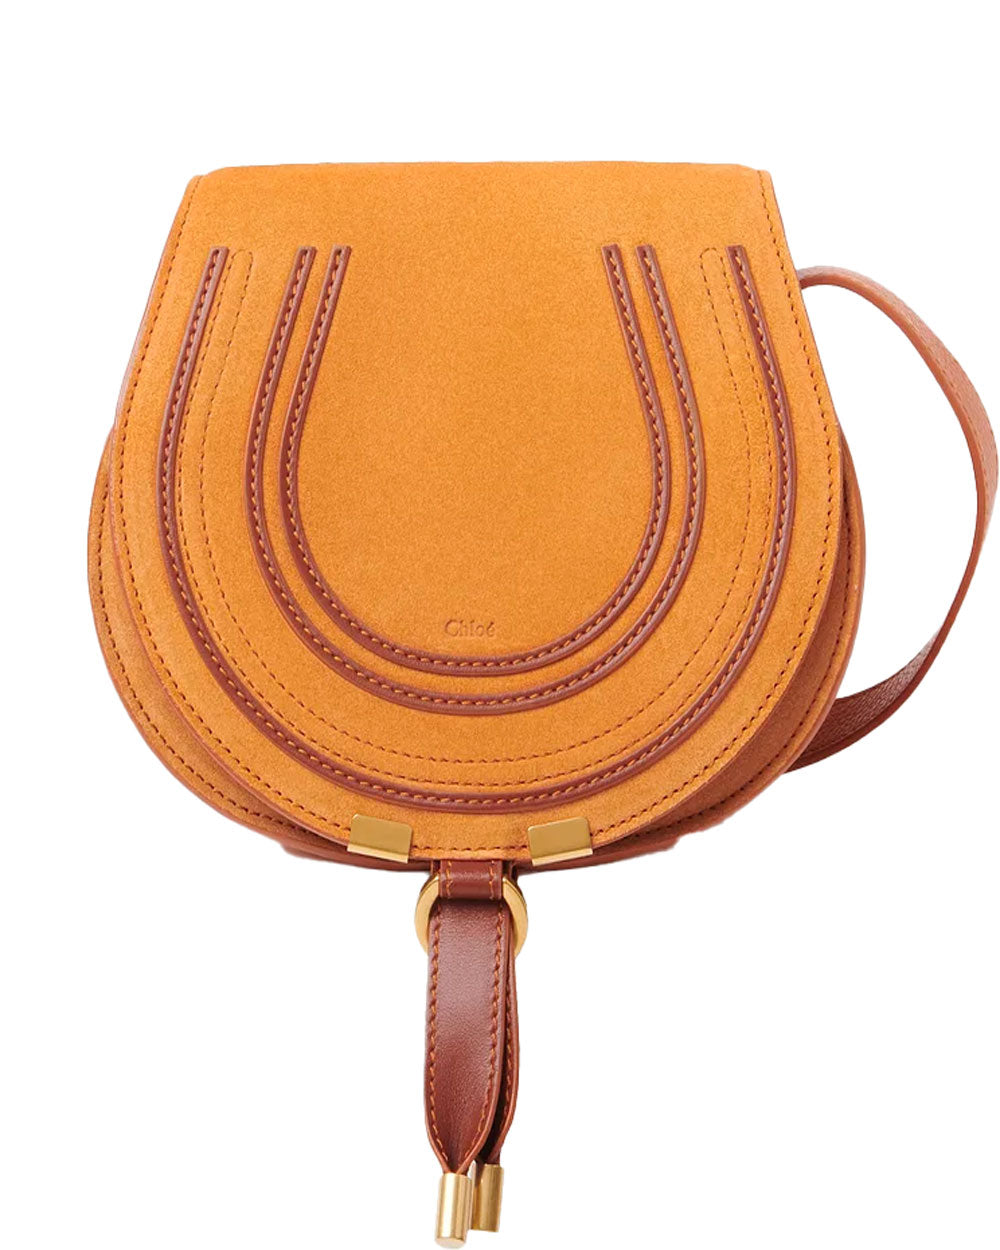 Marcie Mini Saddle Bag in Henna Orange